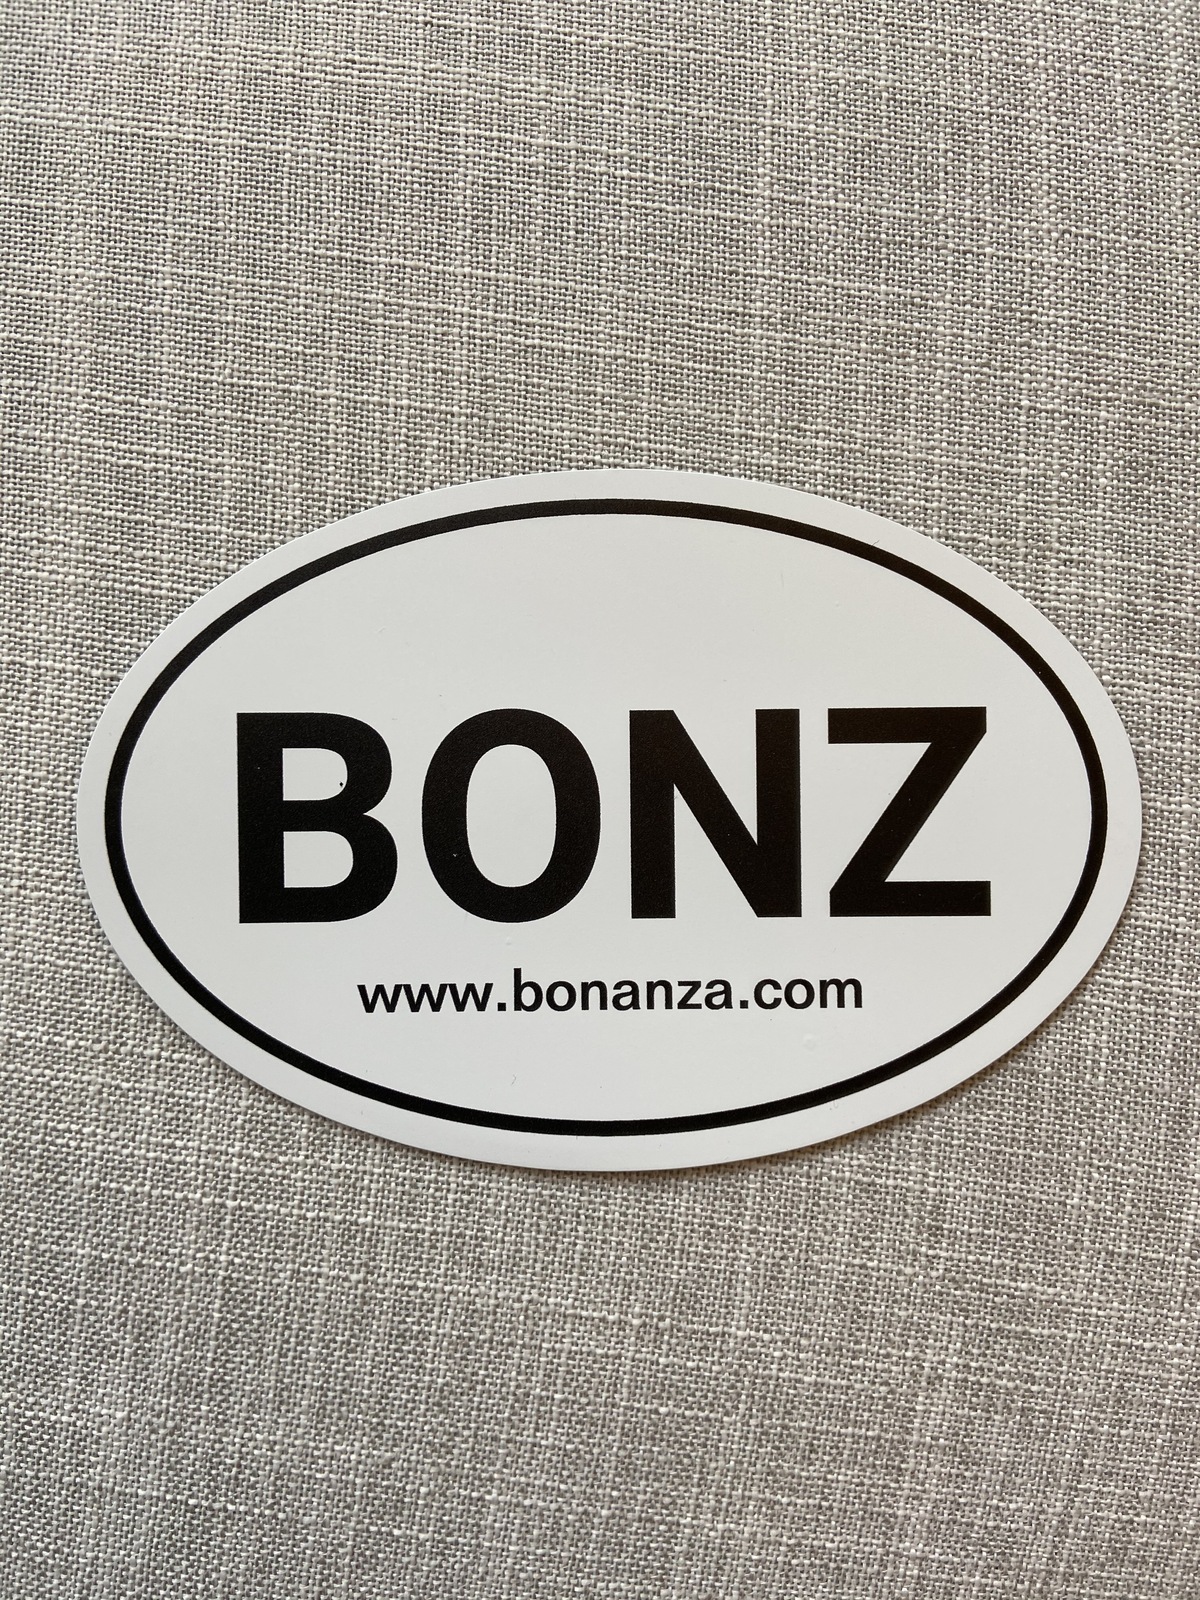 Primary image for Bonanza "BONZ" Car Magnet, 6" x 4"